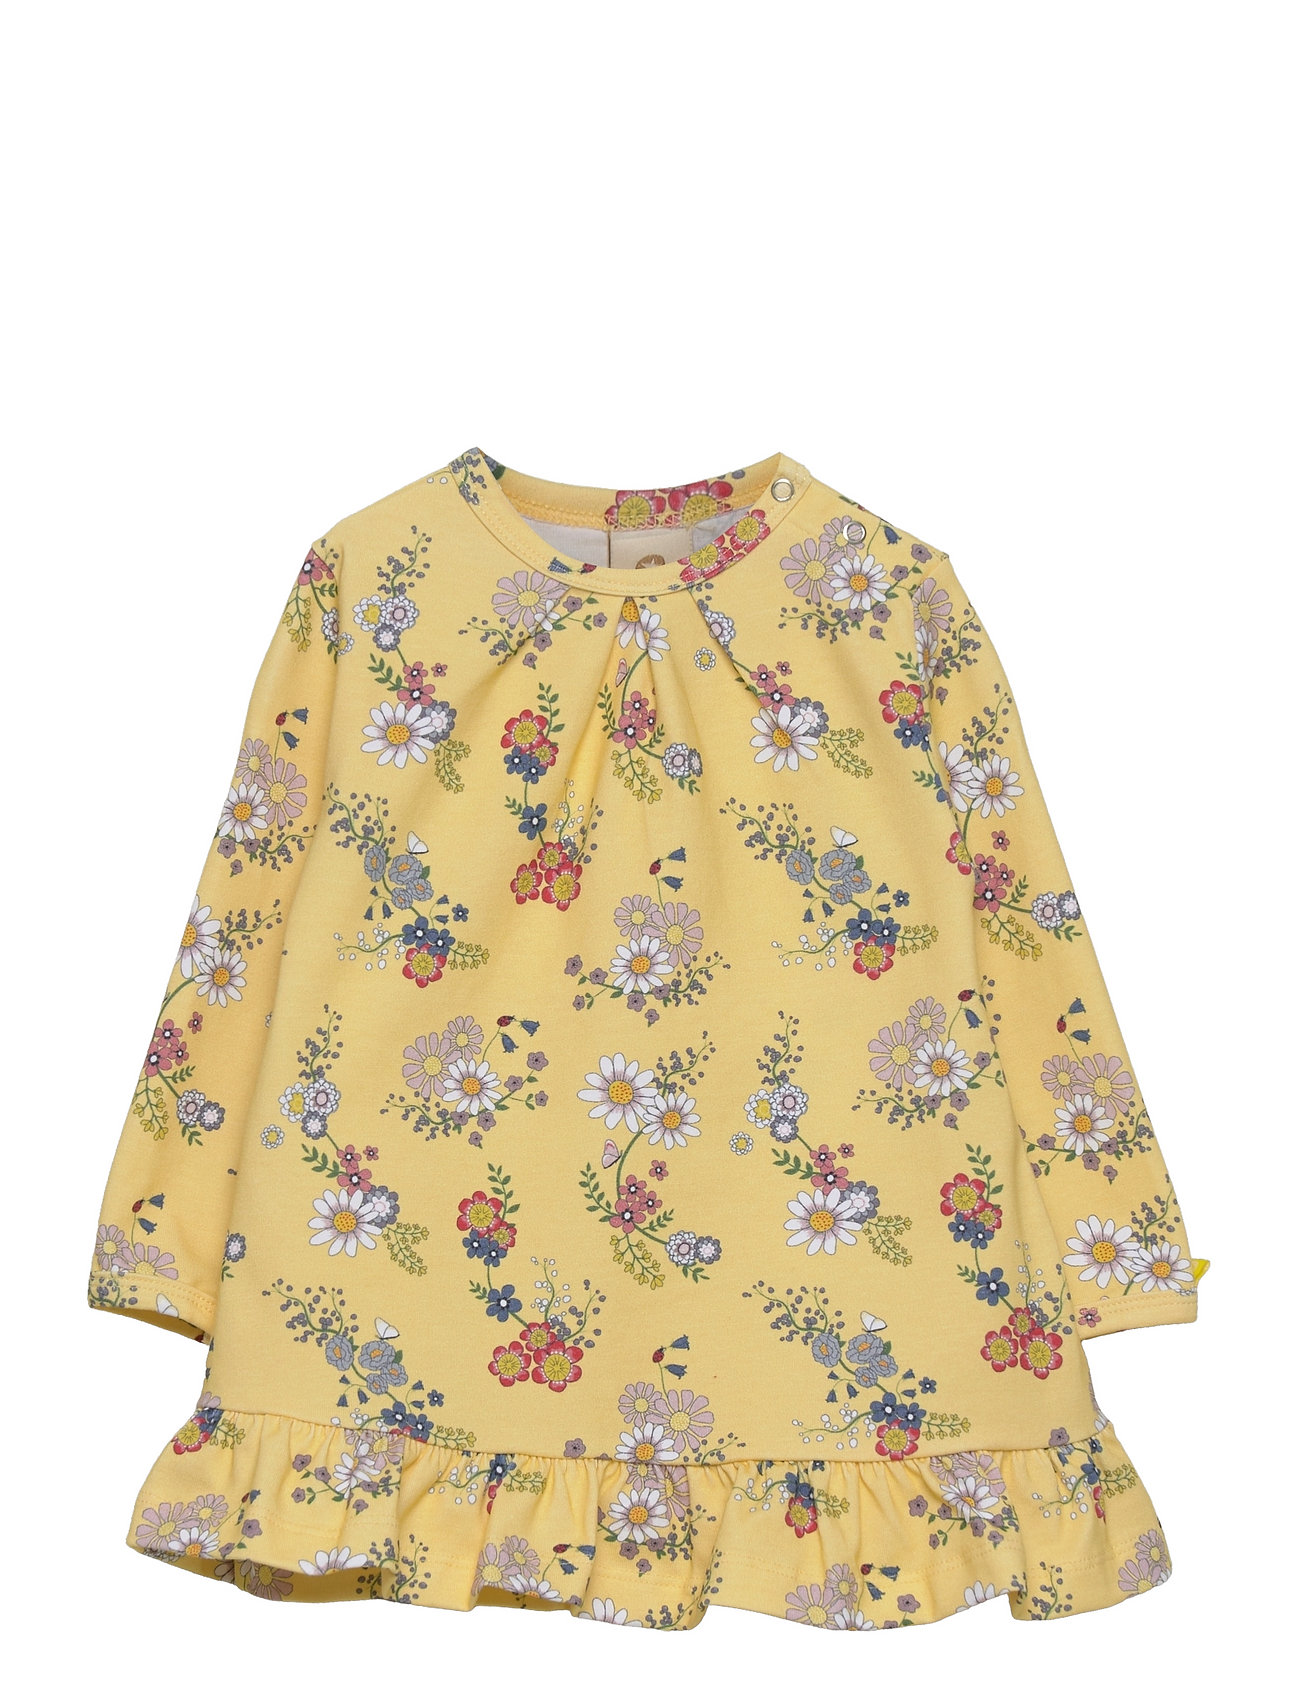 Dress Ls W. Frills, Flower Garden, Soft Yellow Dresses & Skirts Dresses Baby Dresses Long-sleeved Baby Dresses Multi/patterned Smallstuff